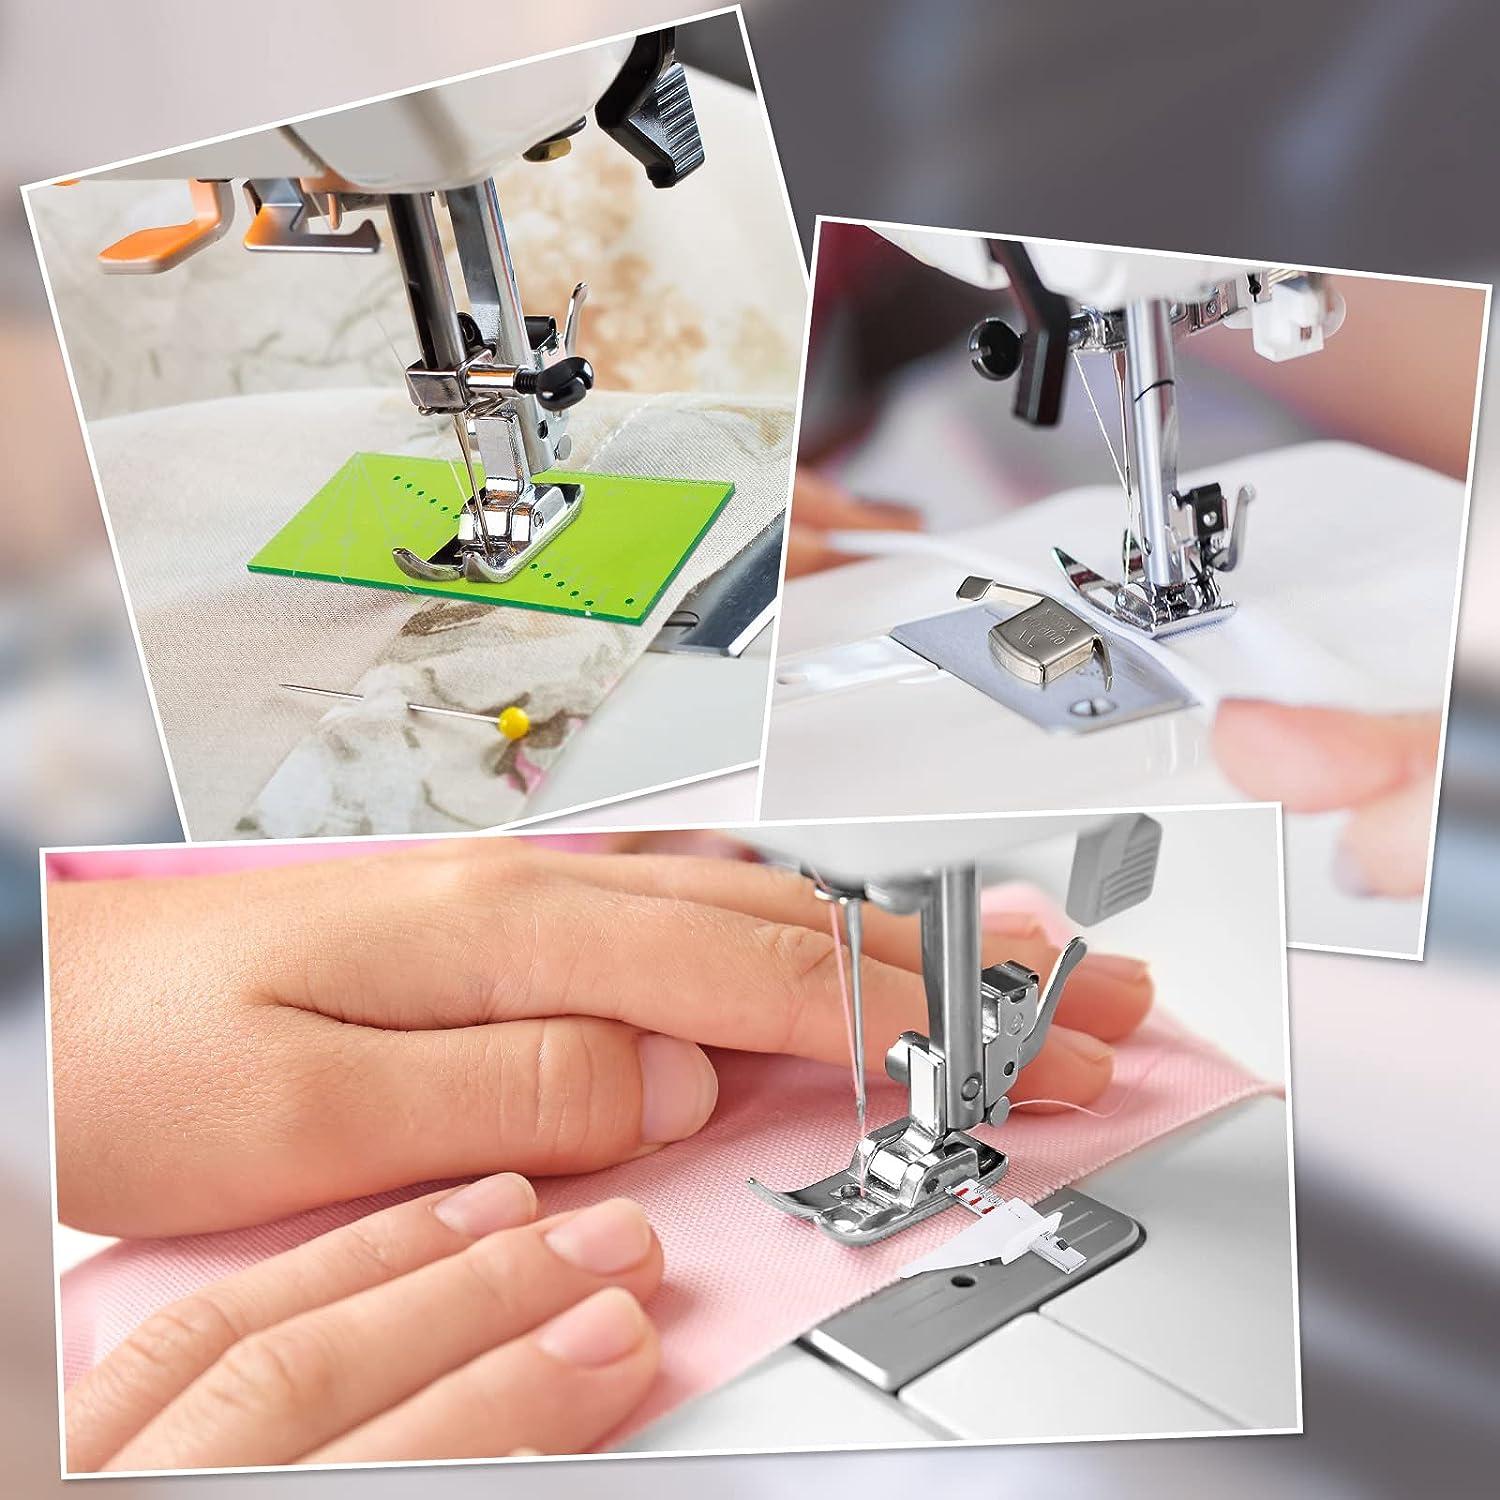 Sewing Machine Seam Guide for Accurate Seam Allowances